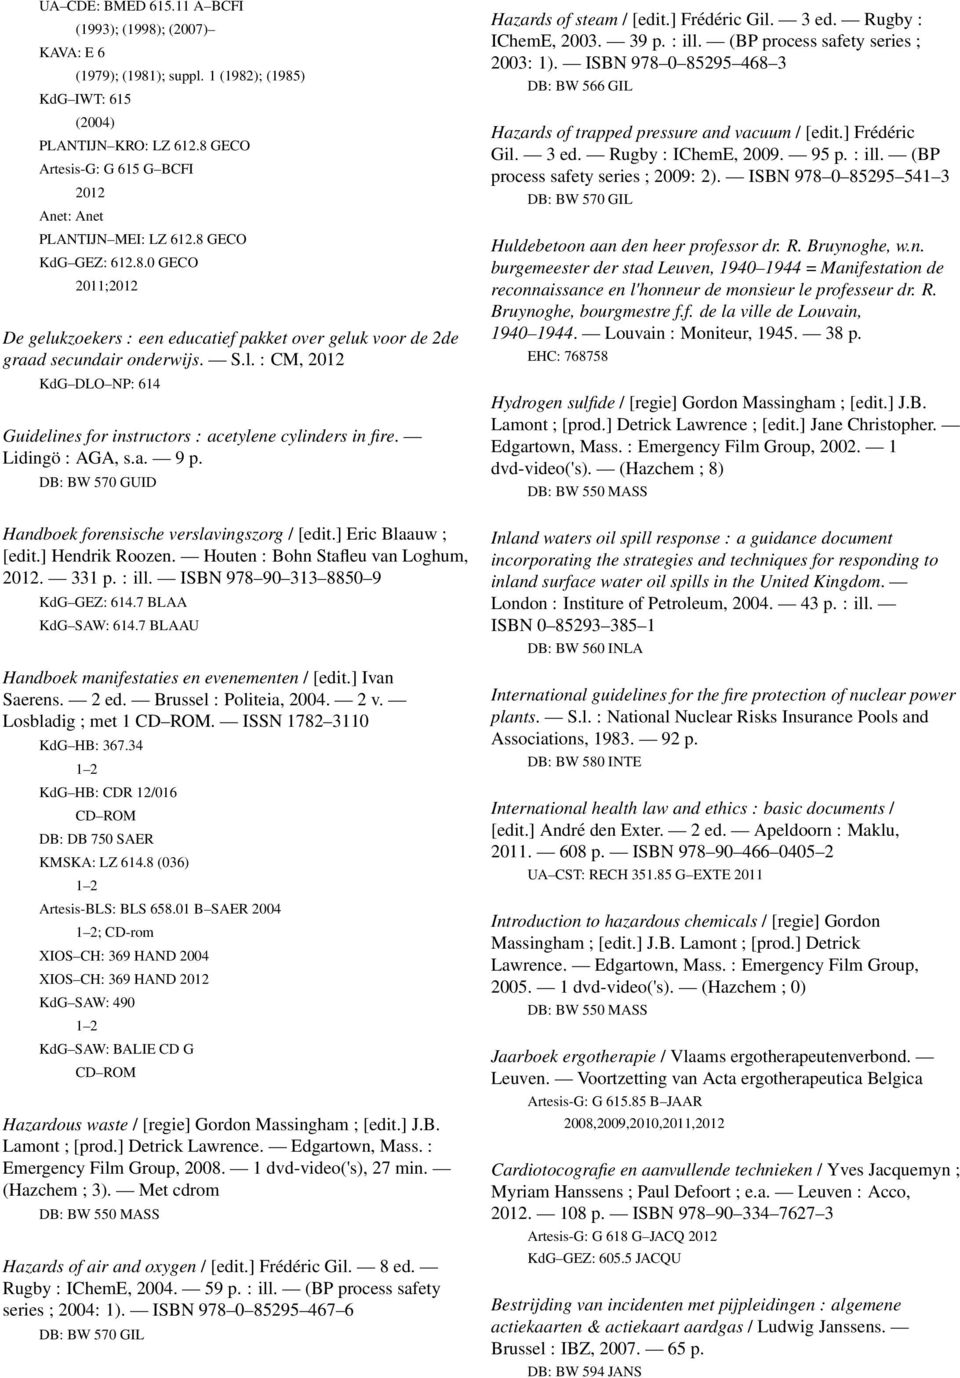 Lidingö : AGA, s.a. 9 p. DB: BW 570 GUID Handboek forensische verslavingszorg / [edit.] Eric Blaauw ; [edit.] Hendrik Roozen. Houten : Bohn Stafleu van Loghum, 2012. 331 p. : ill.